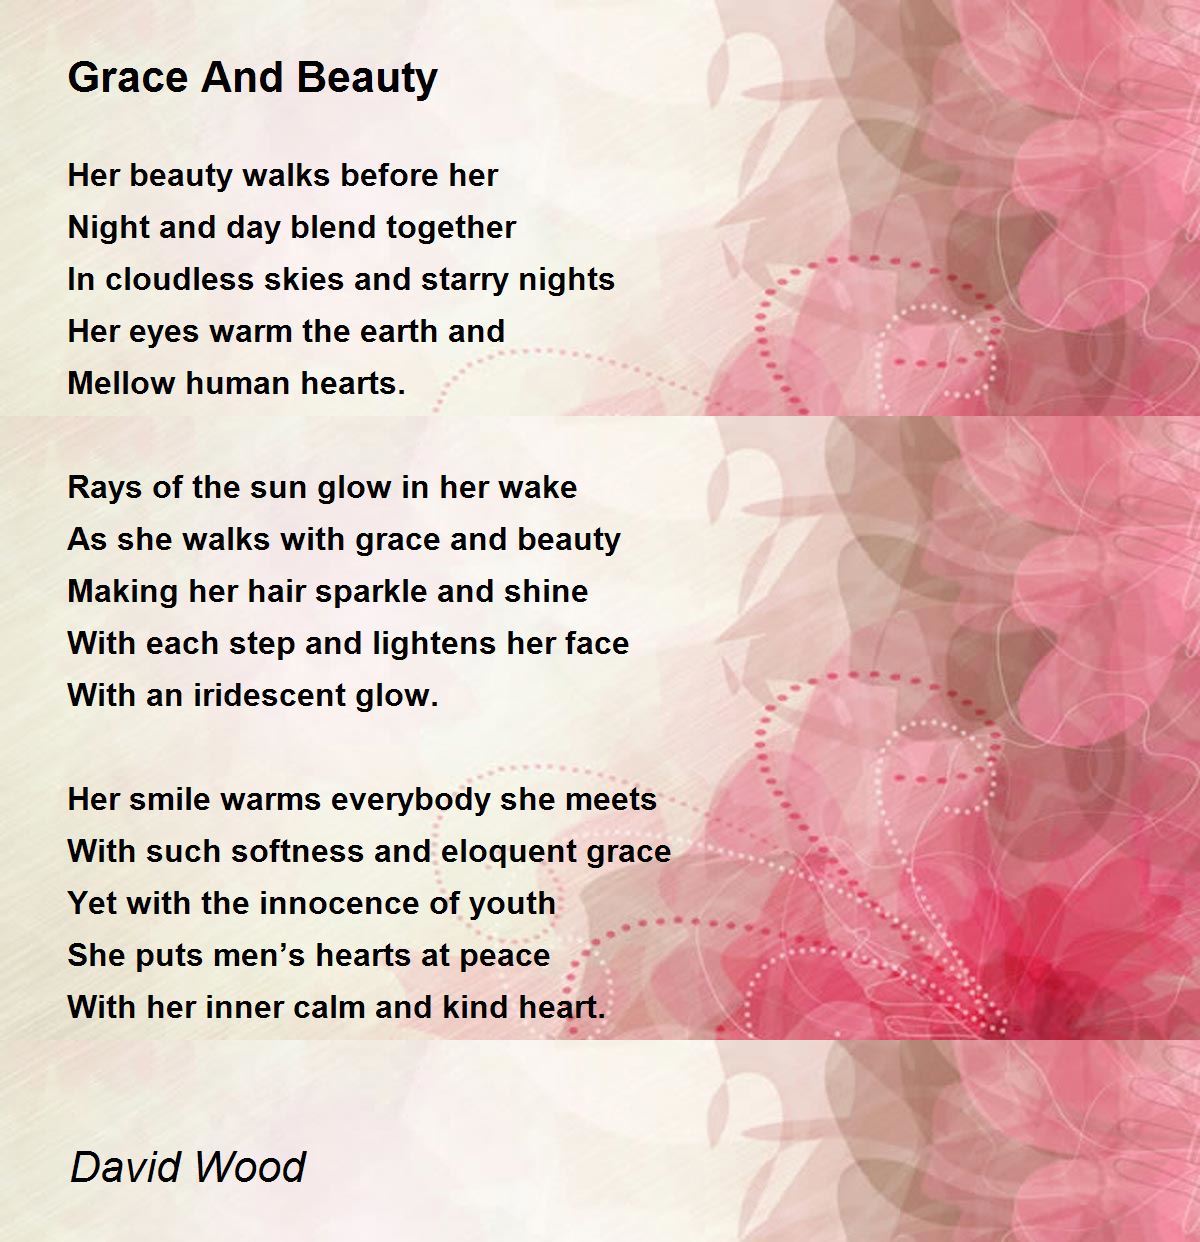 Grace And Beauty Poem by David Wood - Poem Hunter